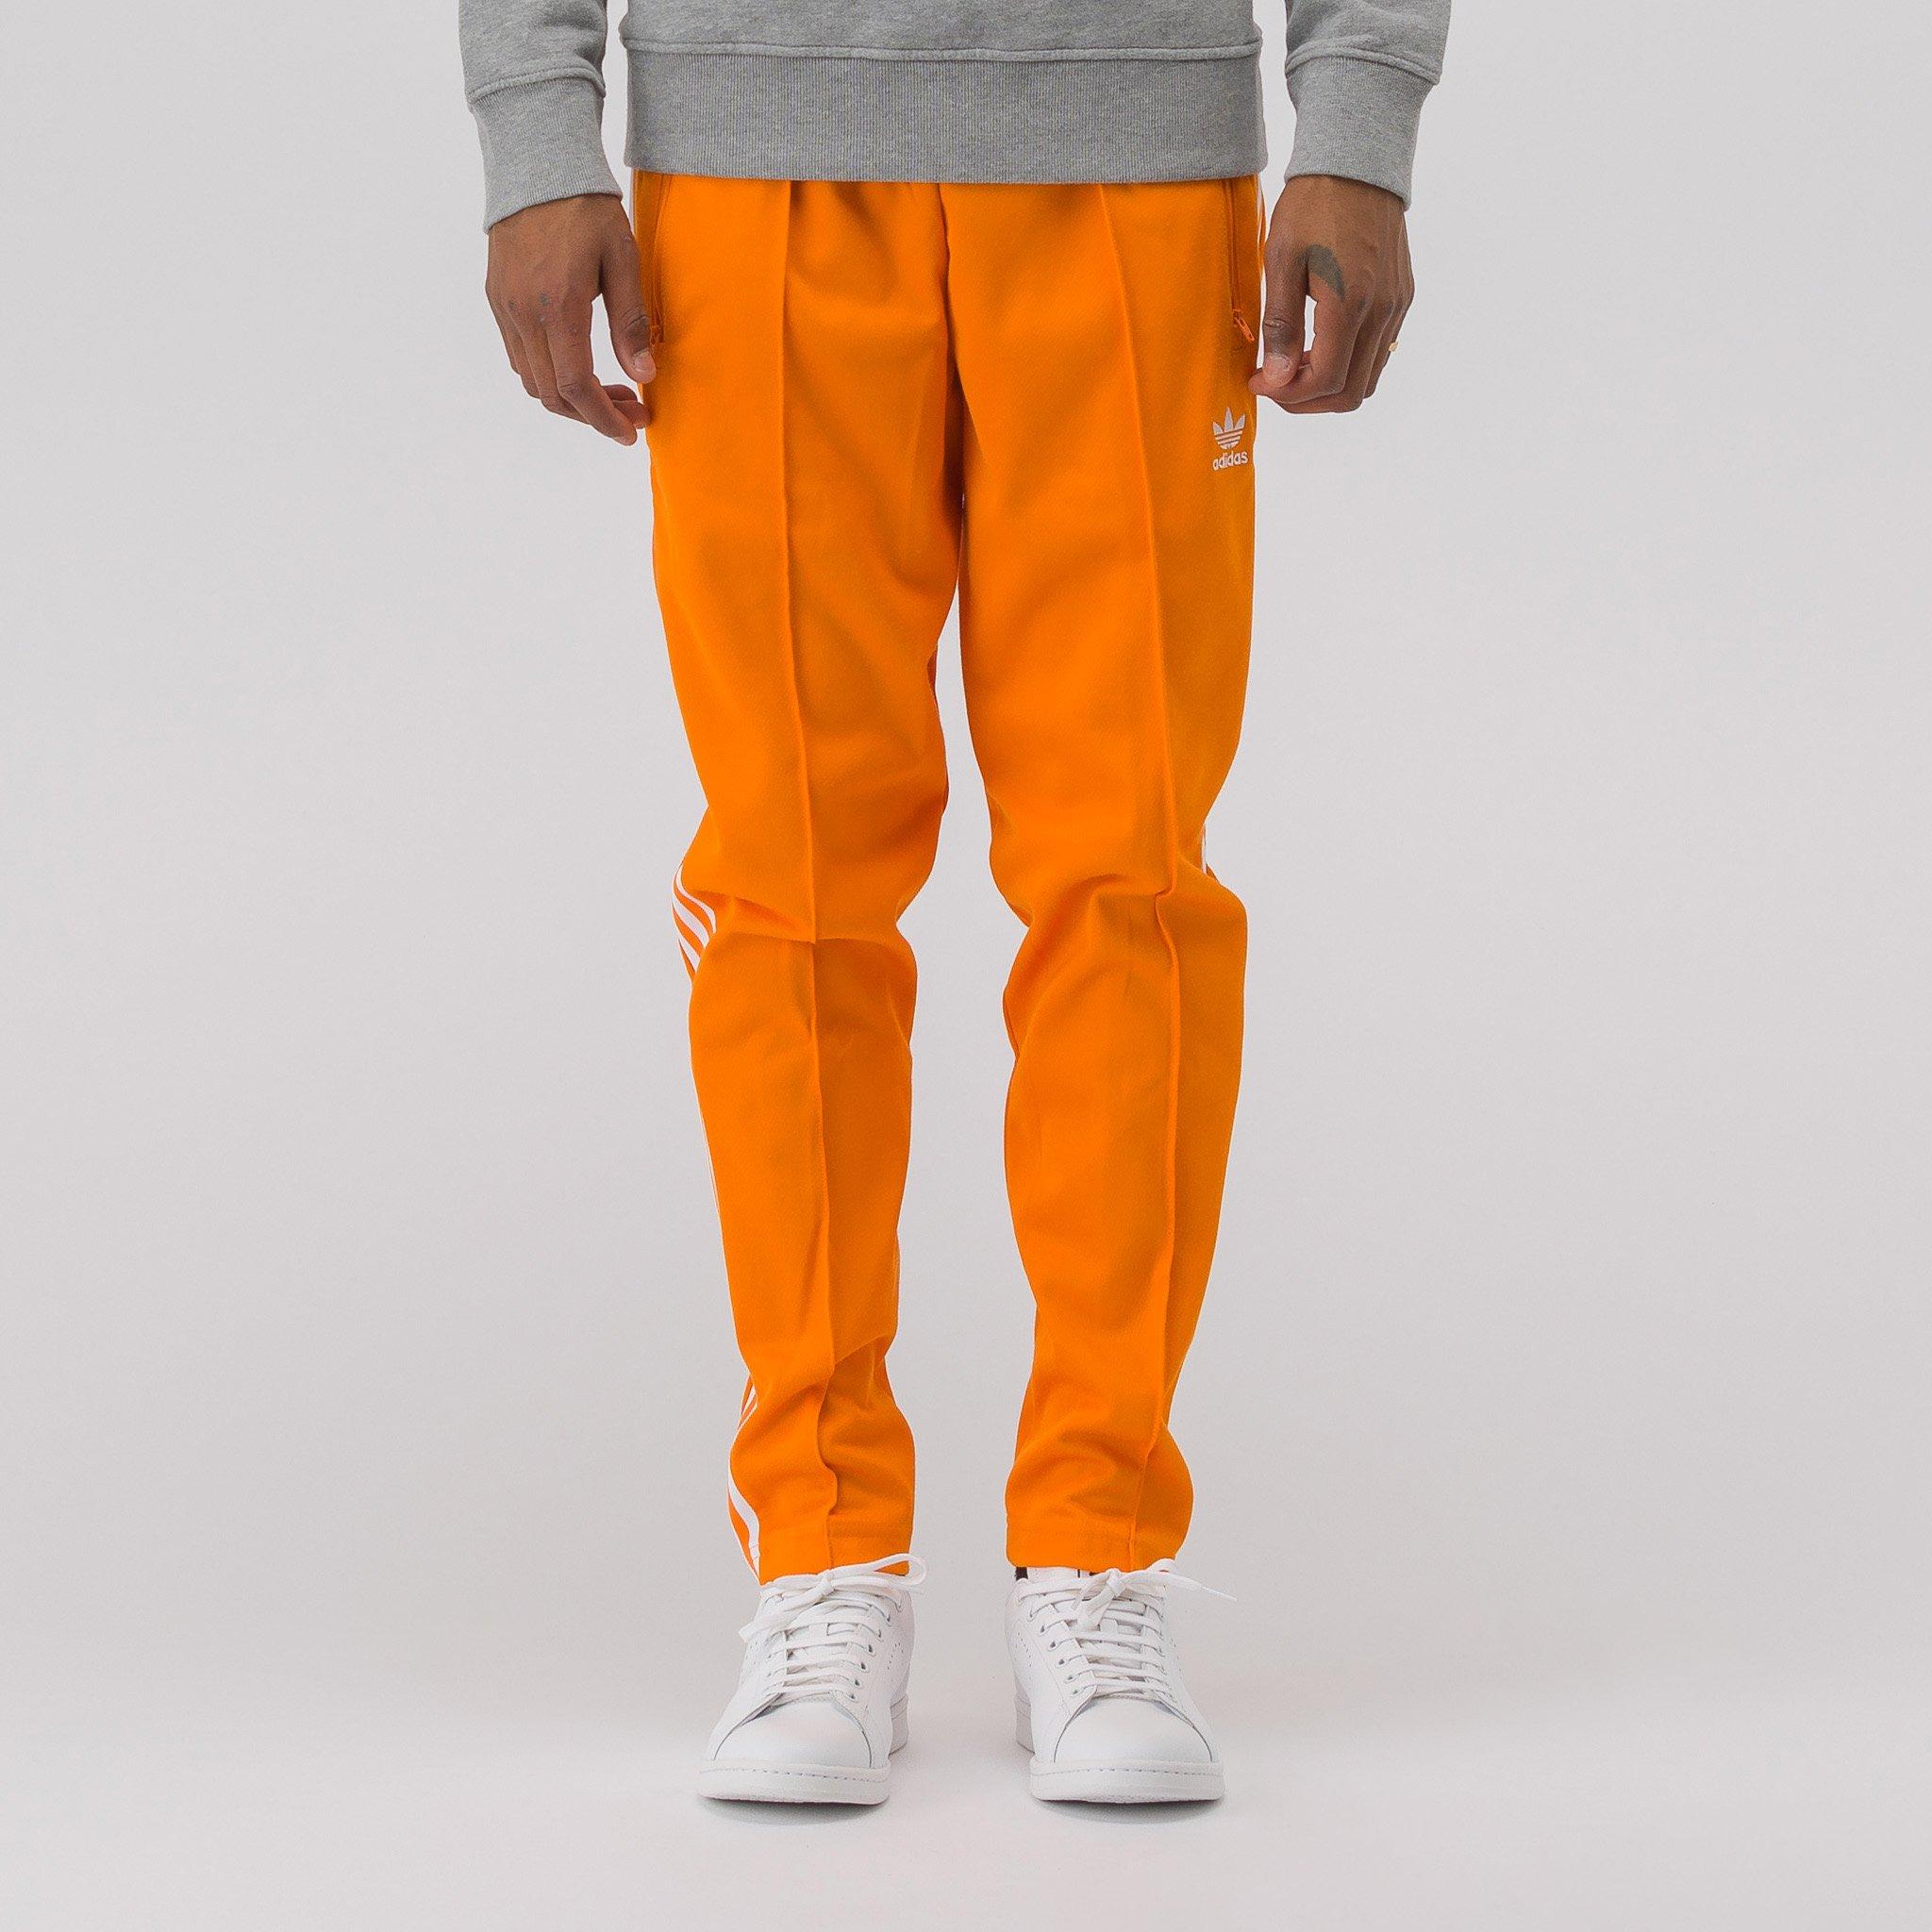 adidas Cotton Beckenbauer Track Pant in Orange for Men - Lyst